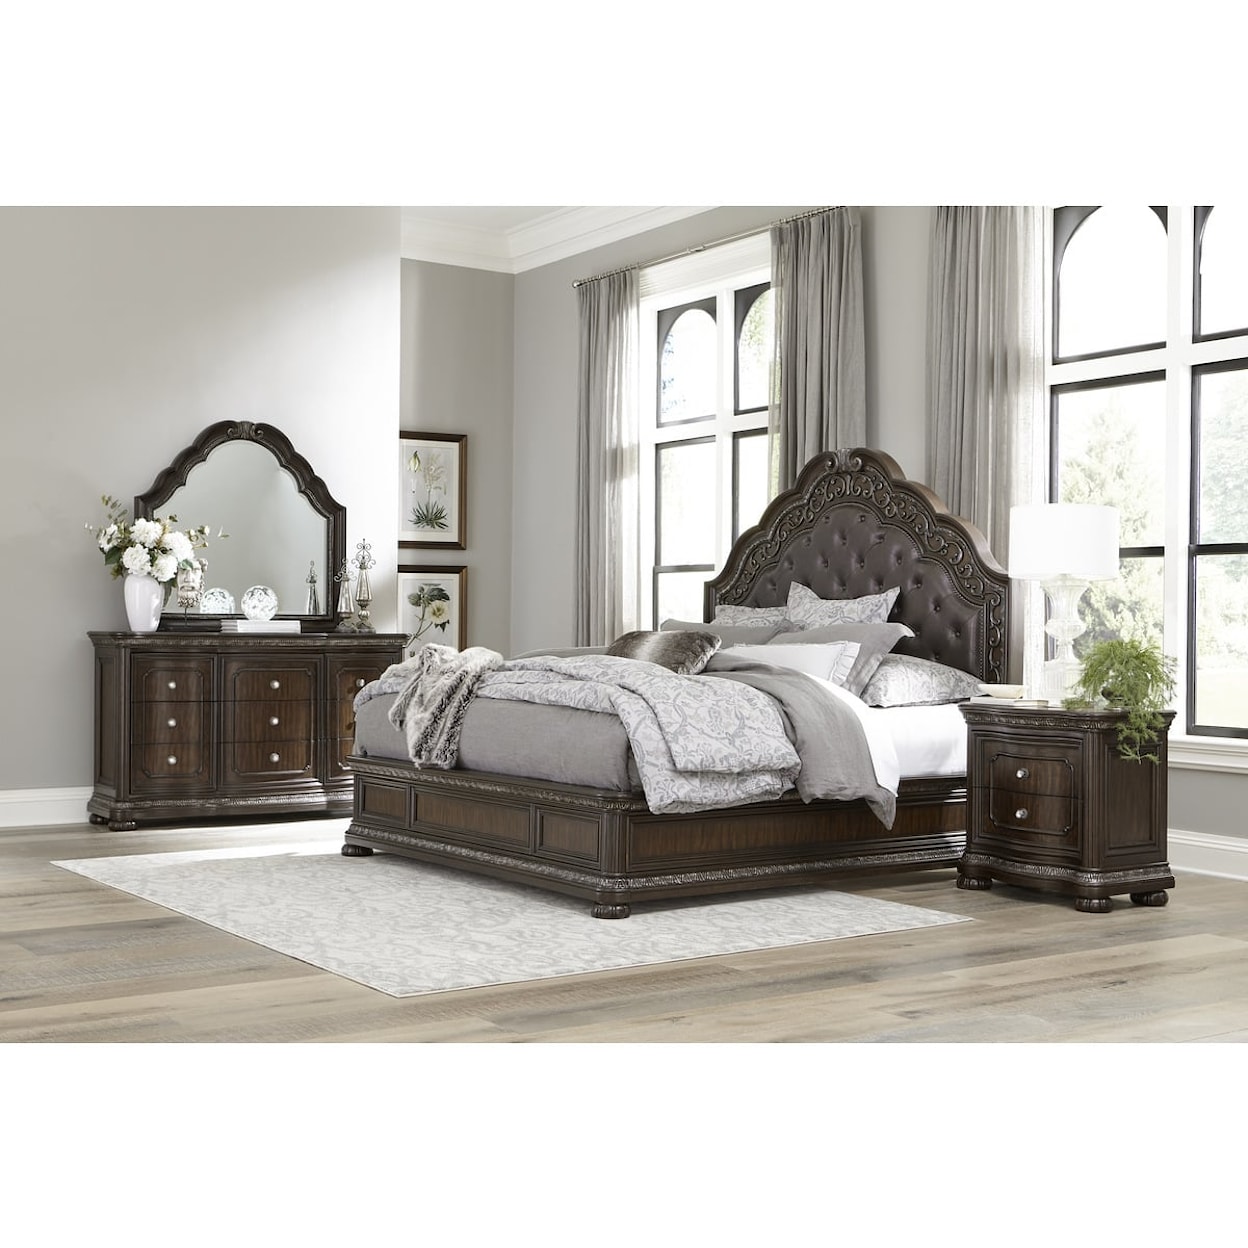 Homelegance Furniture Beddington Queen Bed